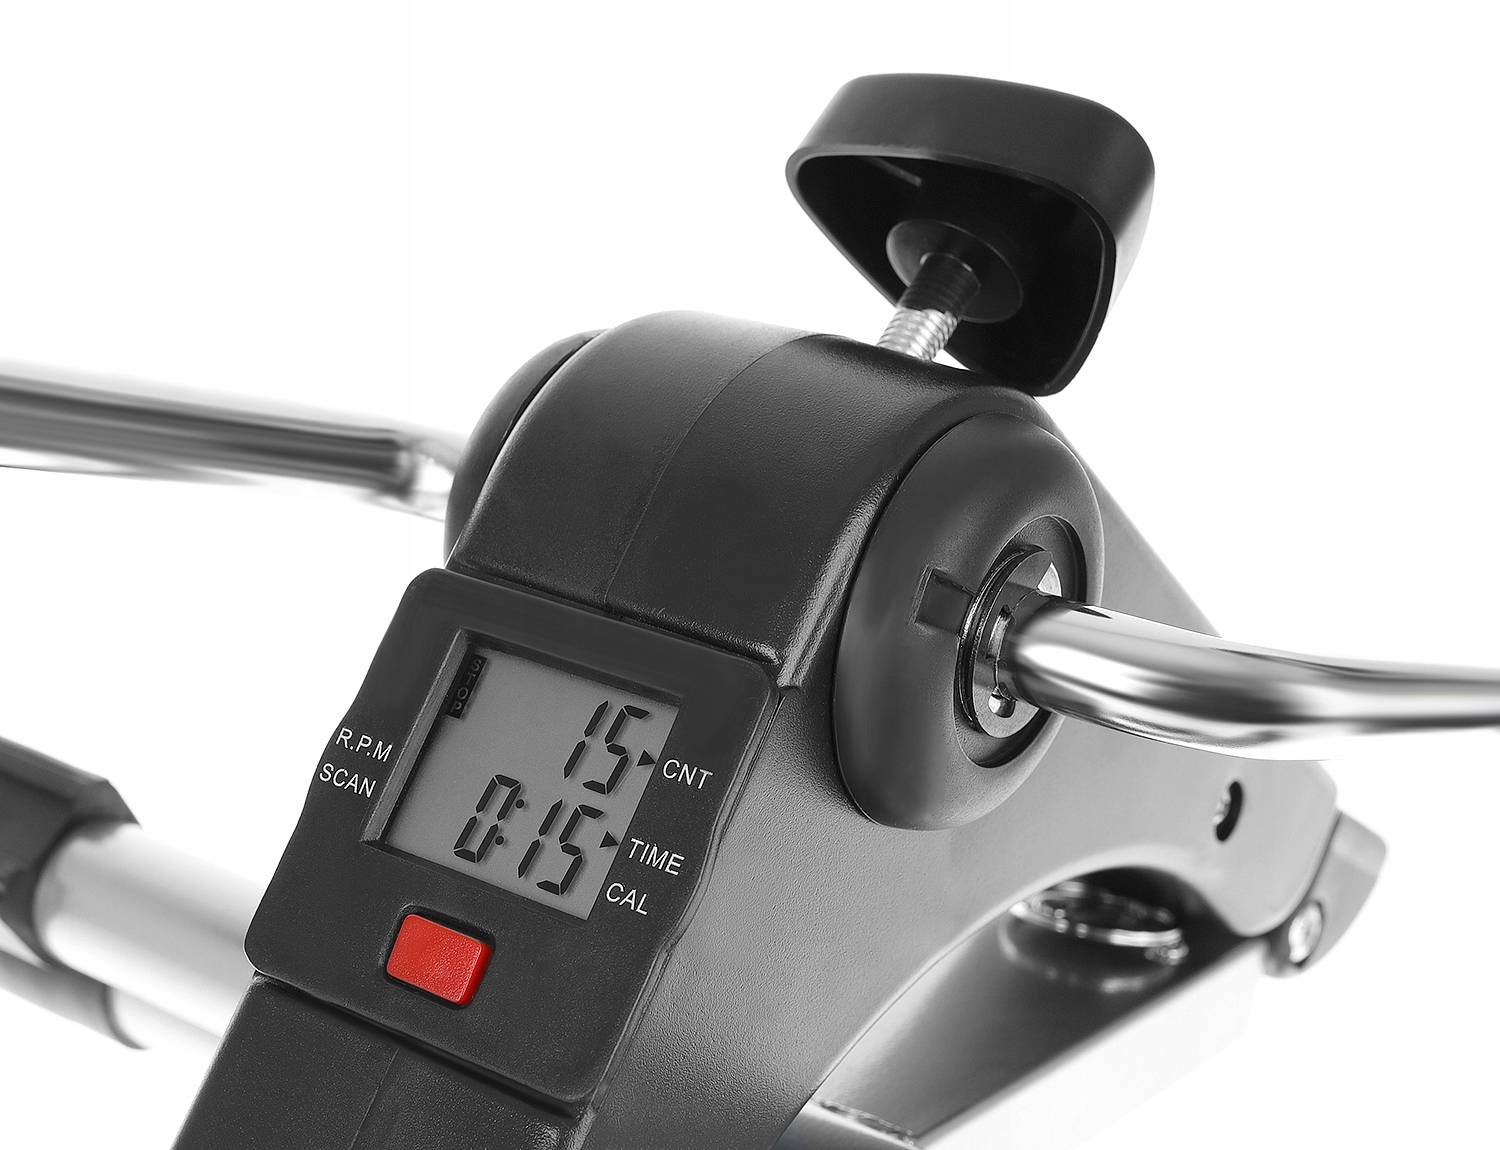 Rowerek Treningowy Rower Rehabilitacyjny Rotor Waga 2.4 kg